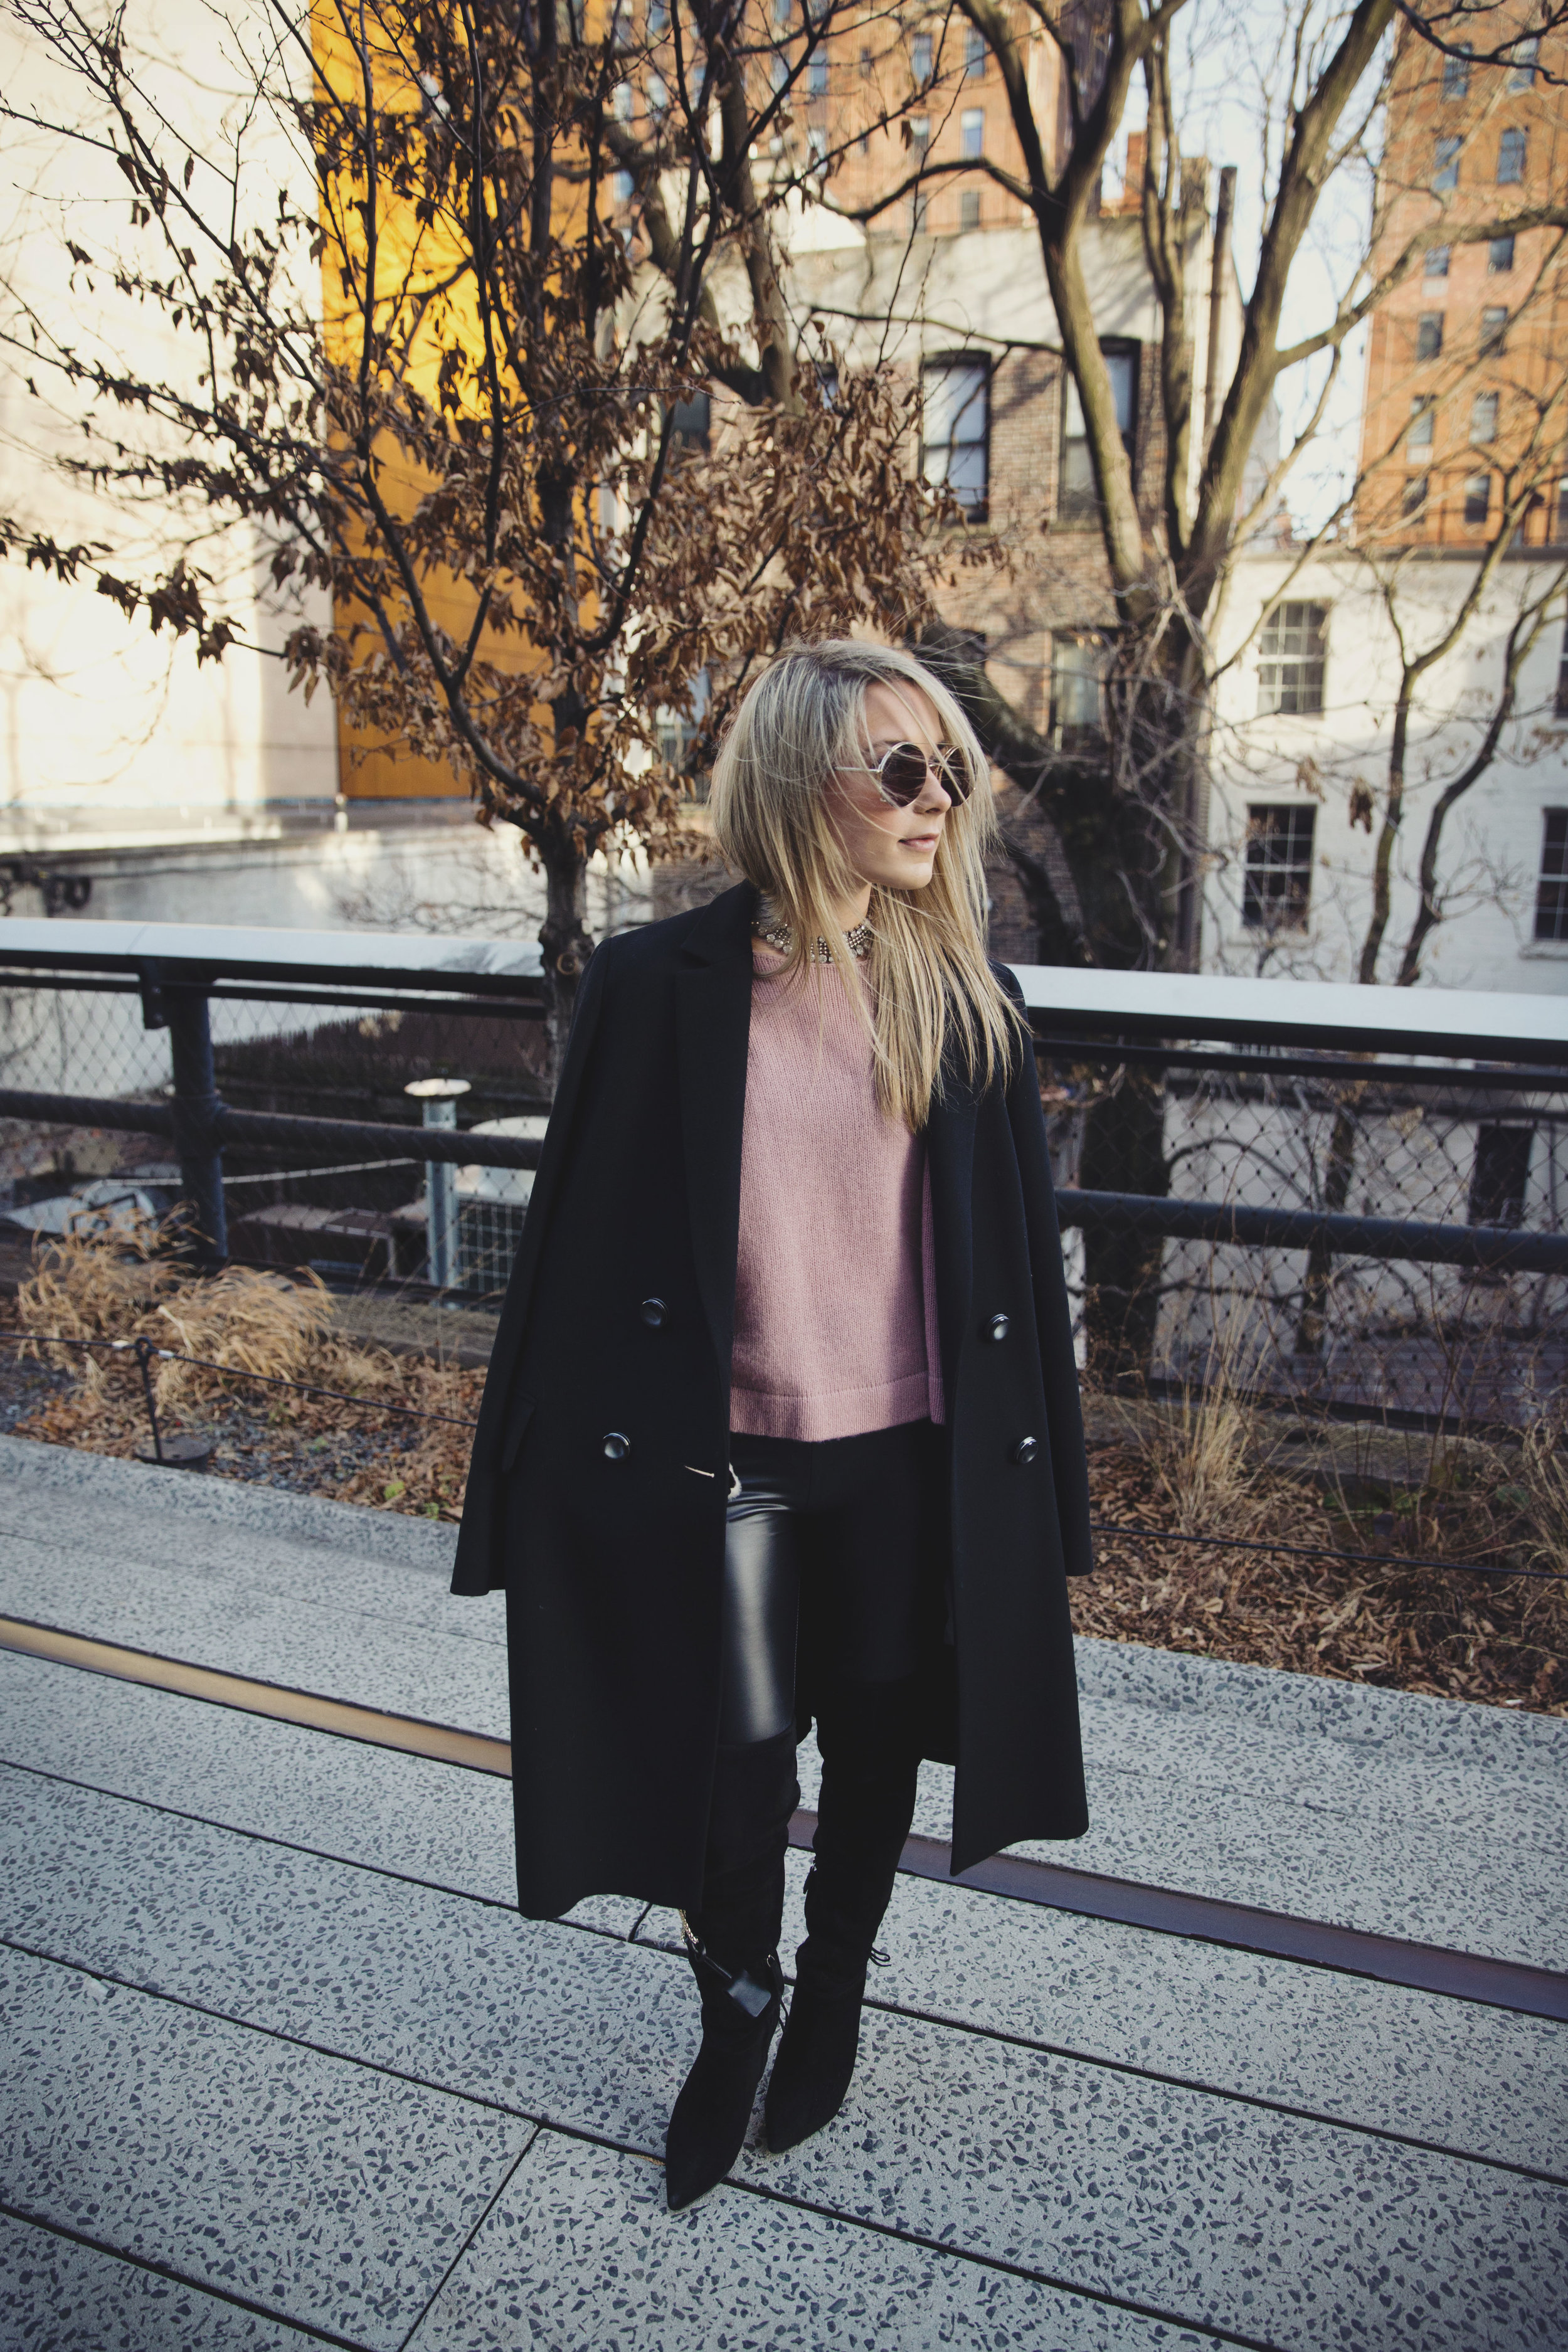 Christie Ferrari | New York Fashion Blogger